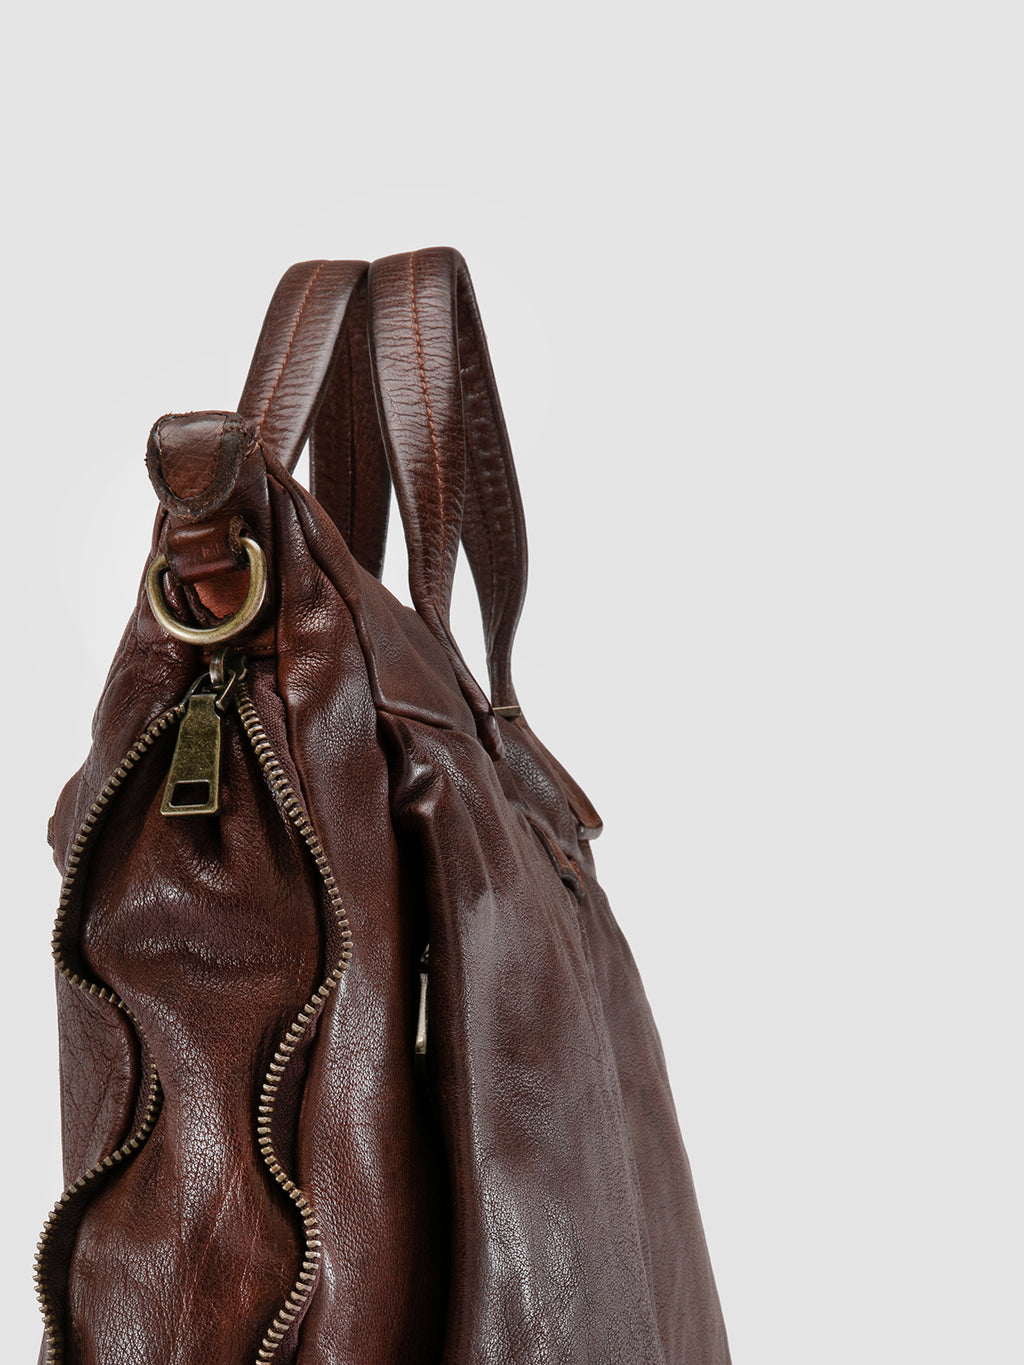 HELMET 046 - Brown Leather Briefcase